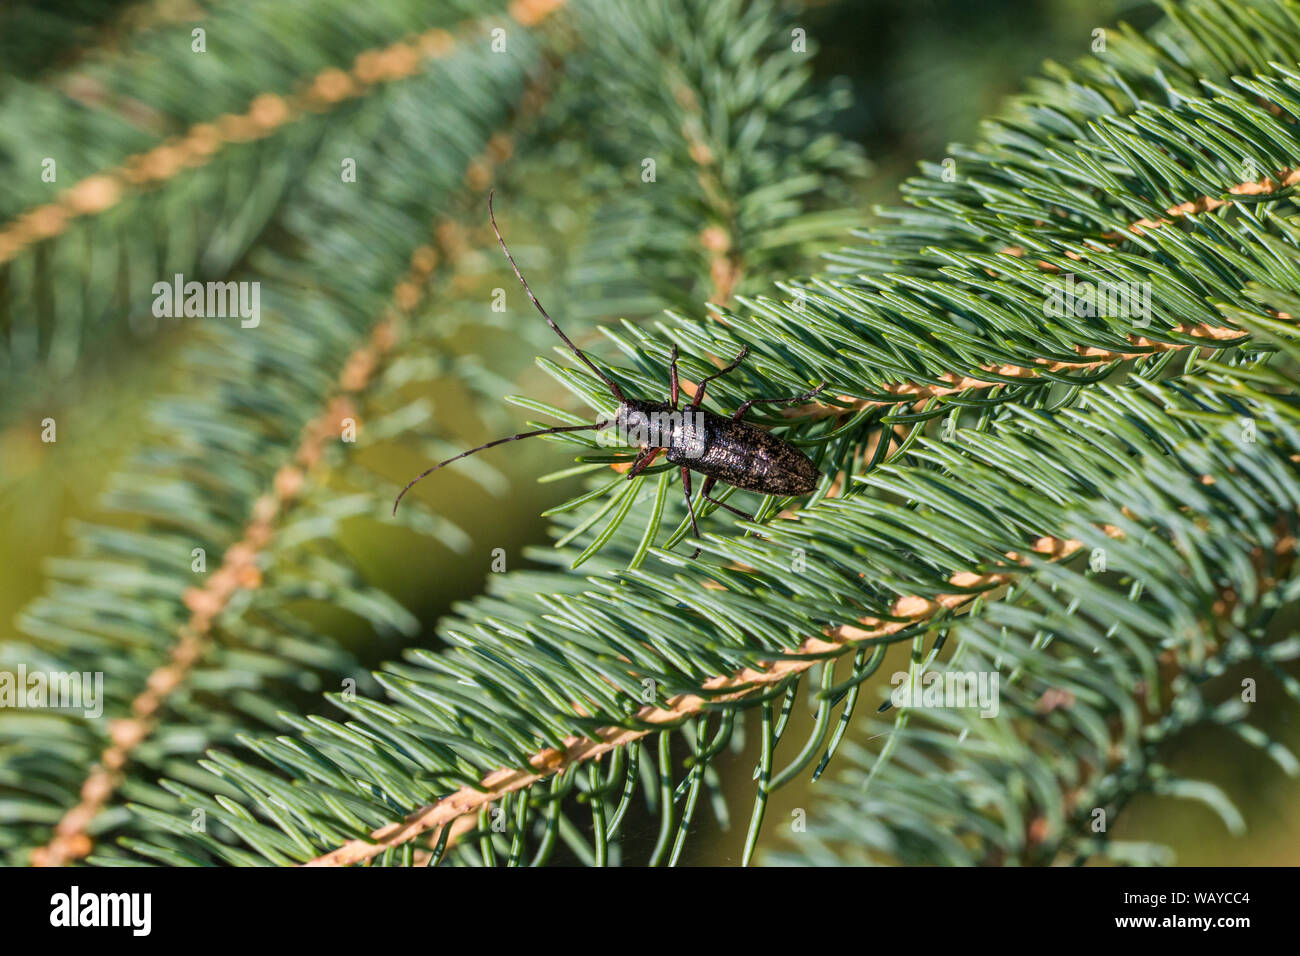 white-spotted sawyer or spruce sawyer (Monochamus scutellatus) Stock Photo